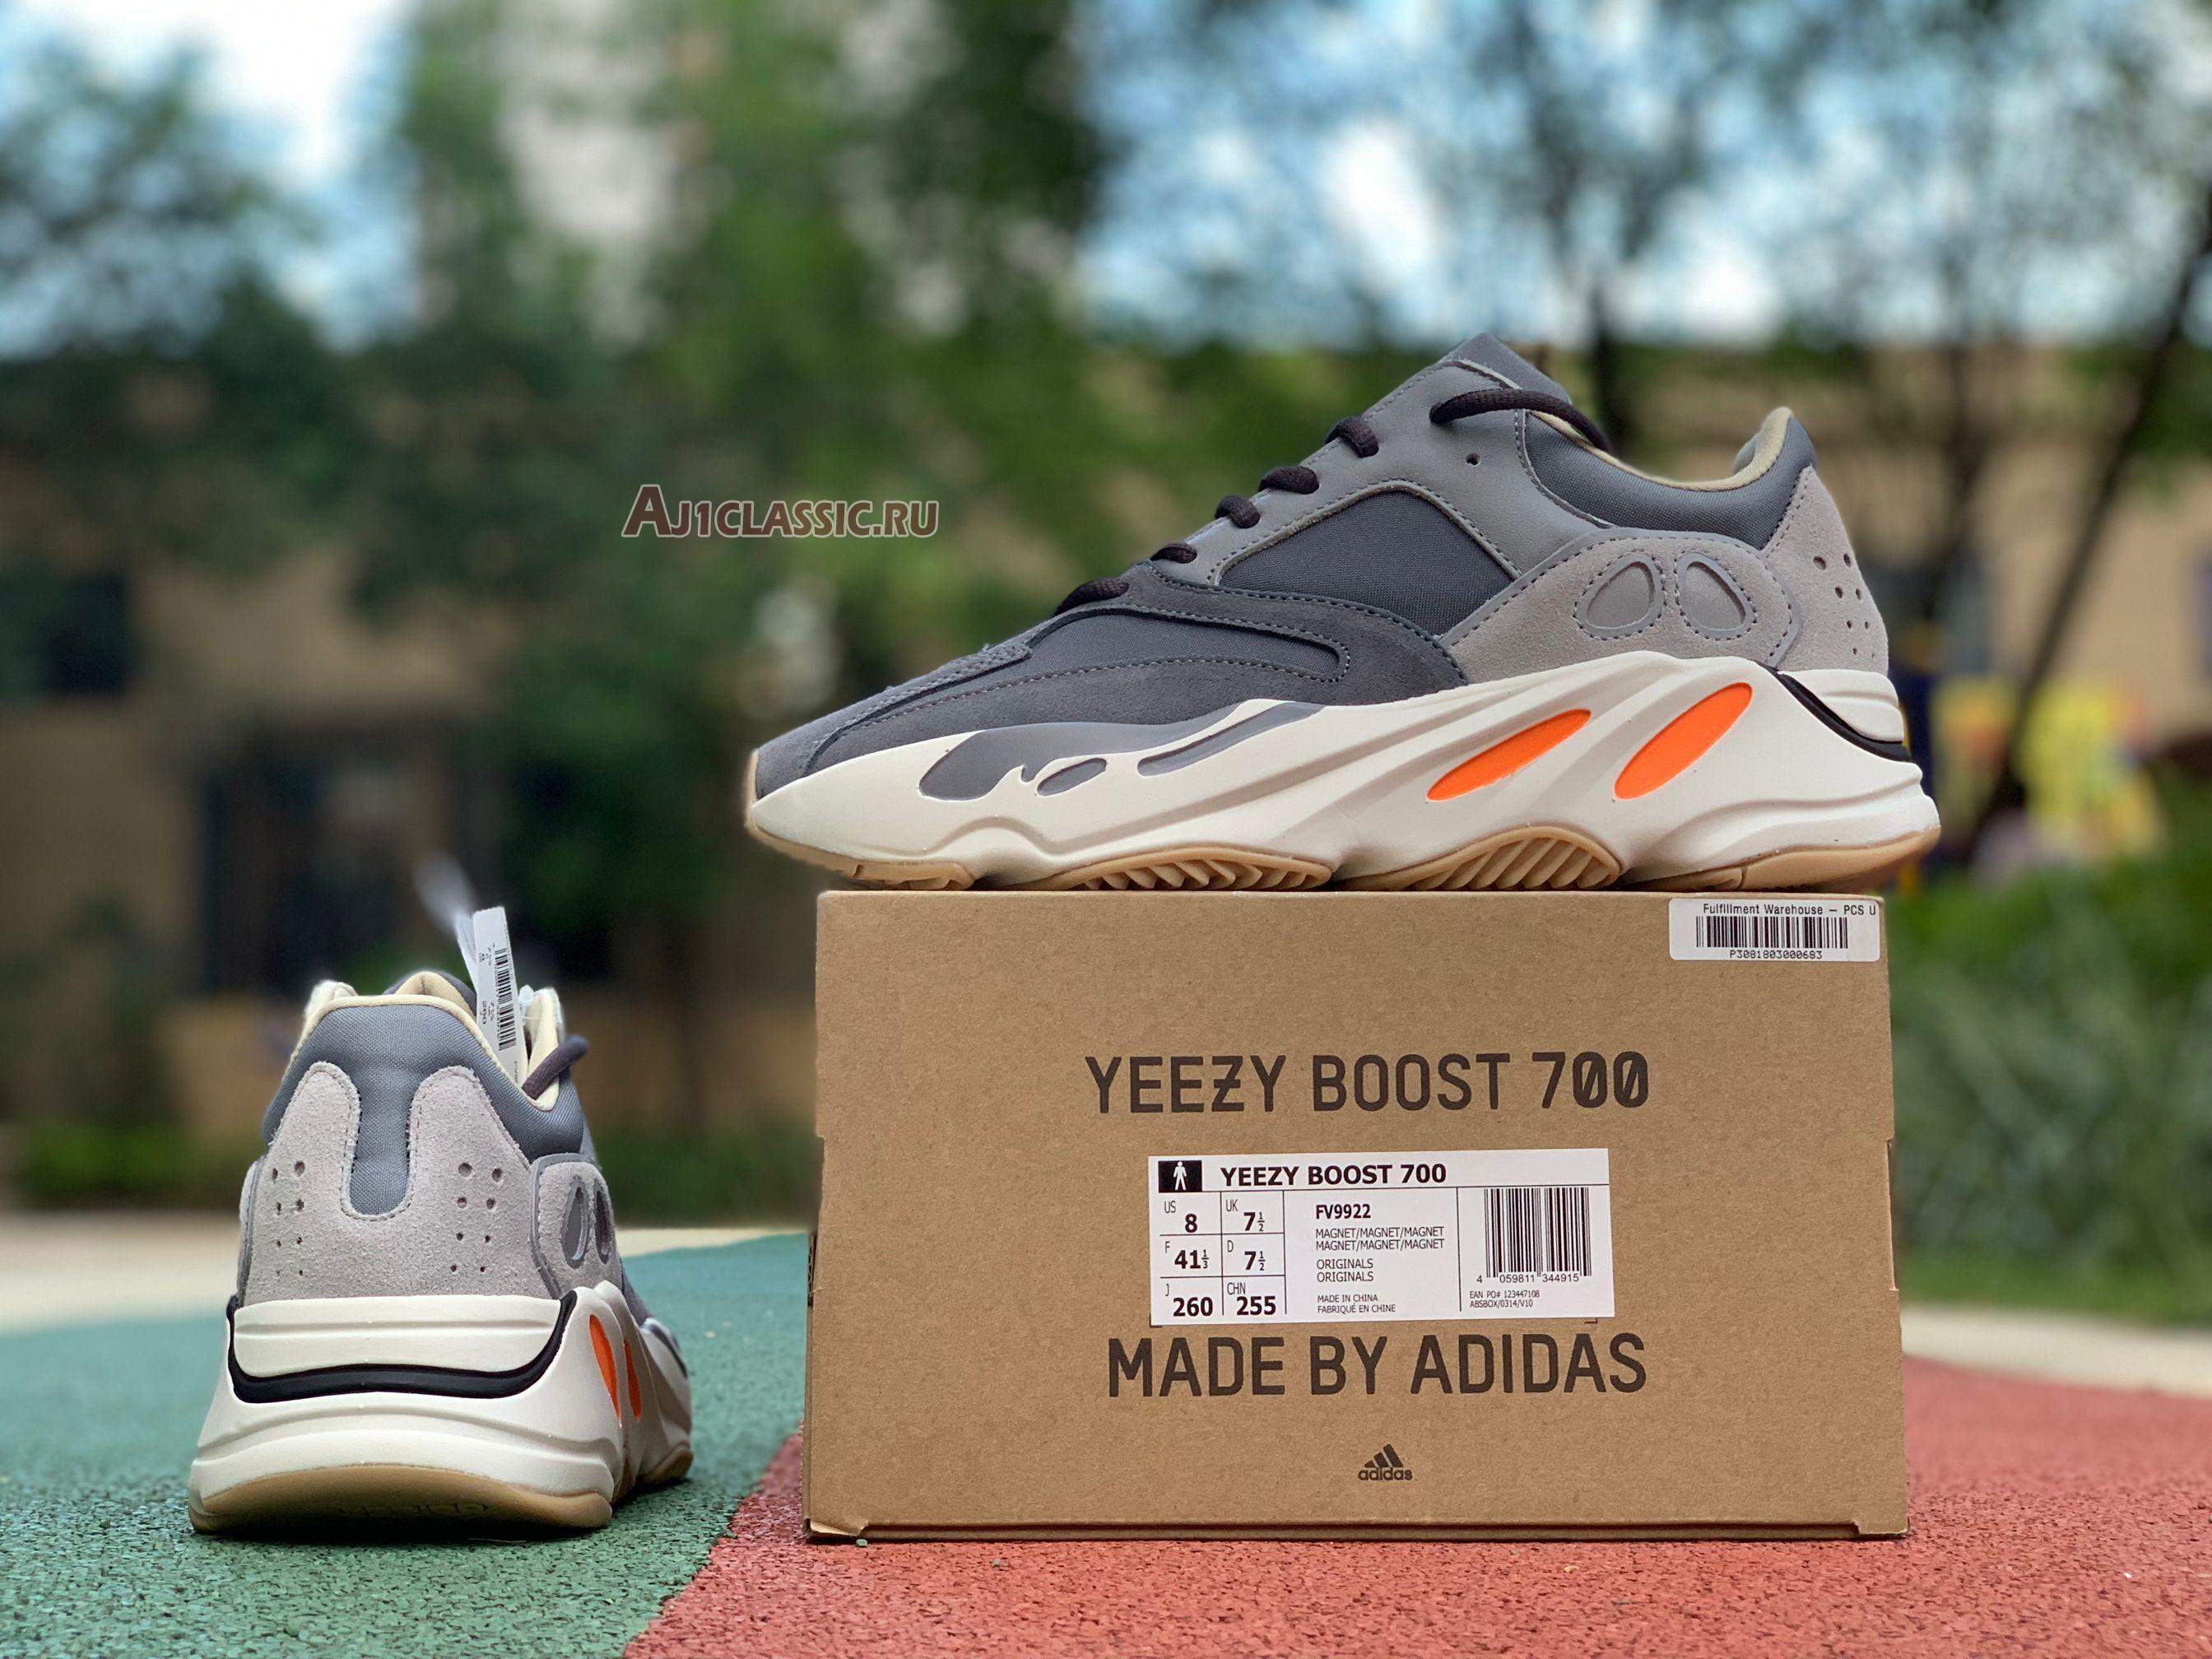 Adidas Yeezy Boost 700 "Magnet" FV9922